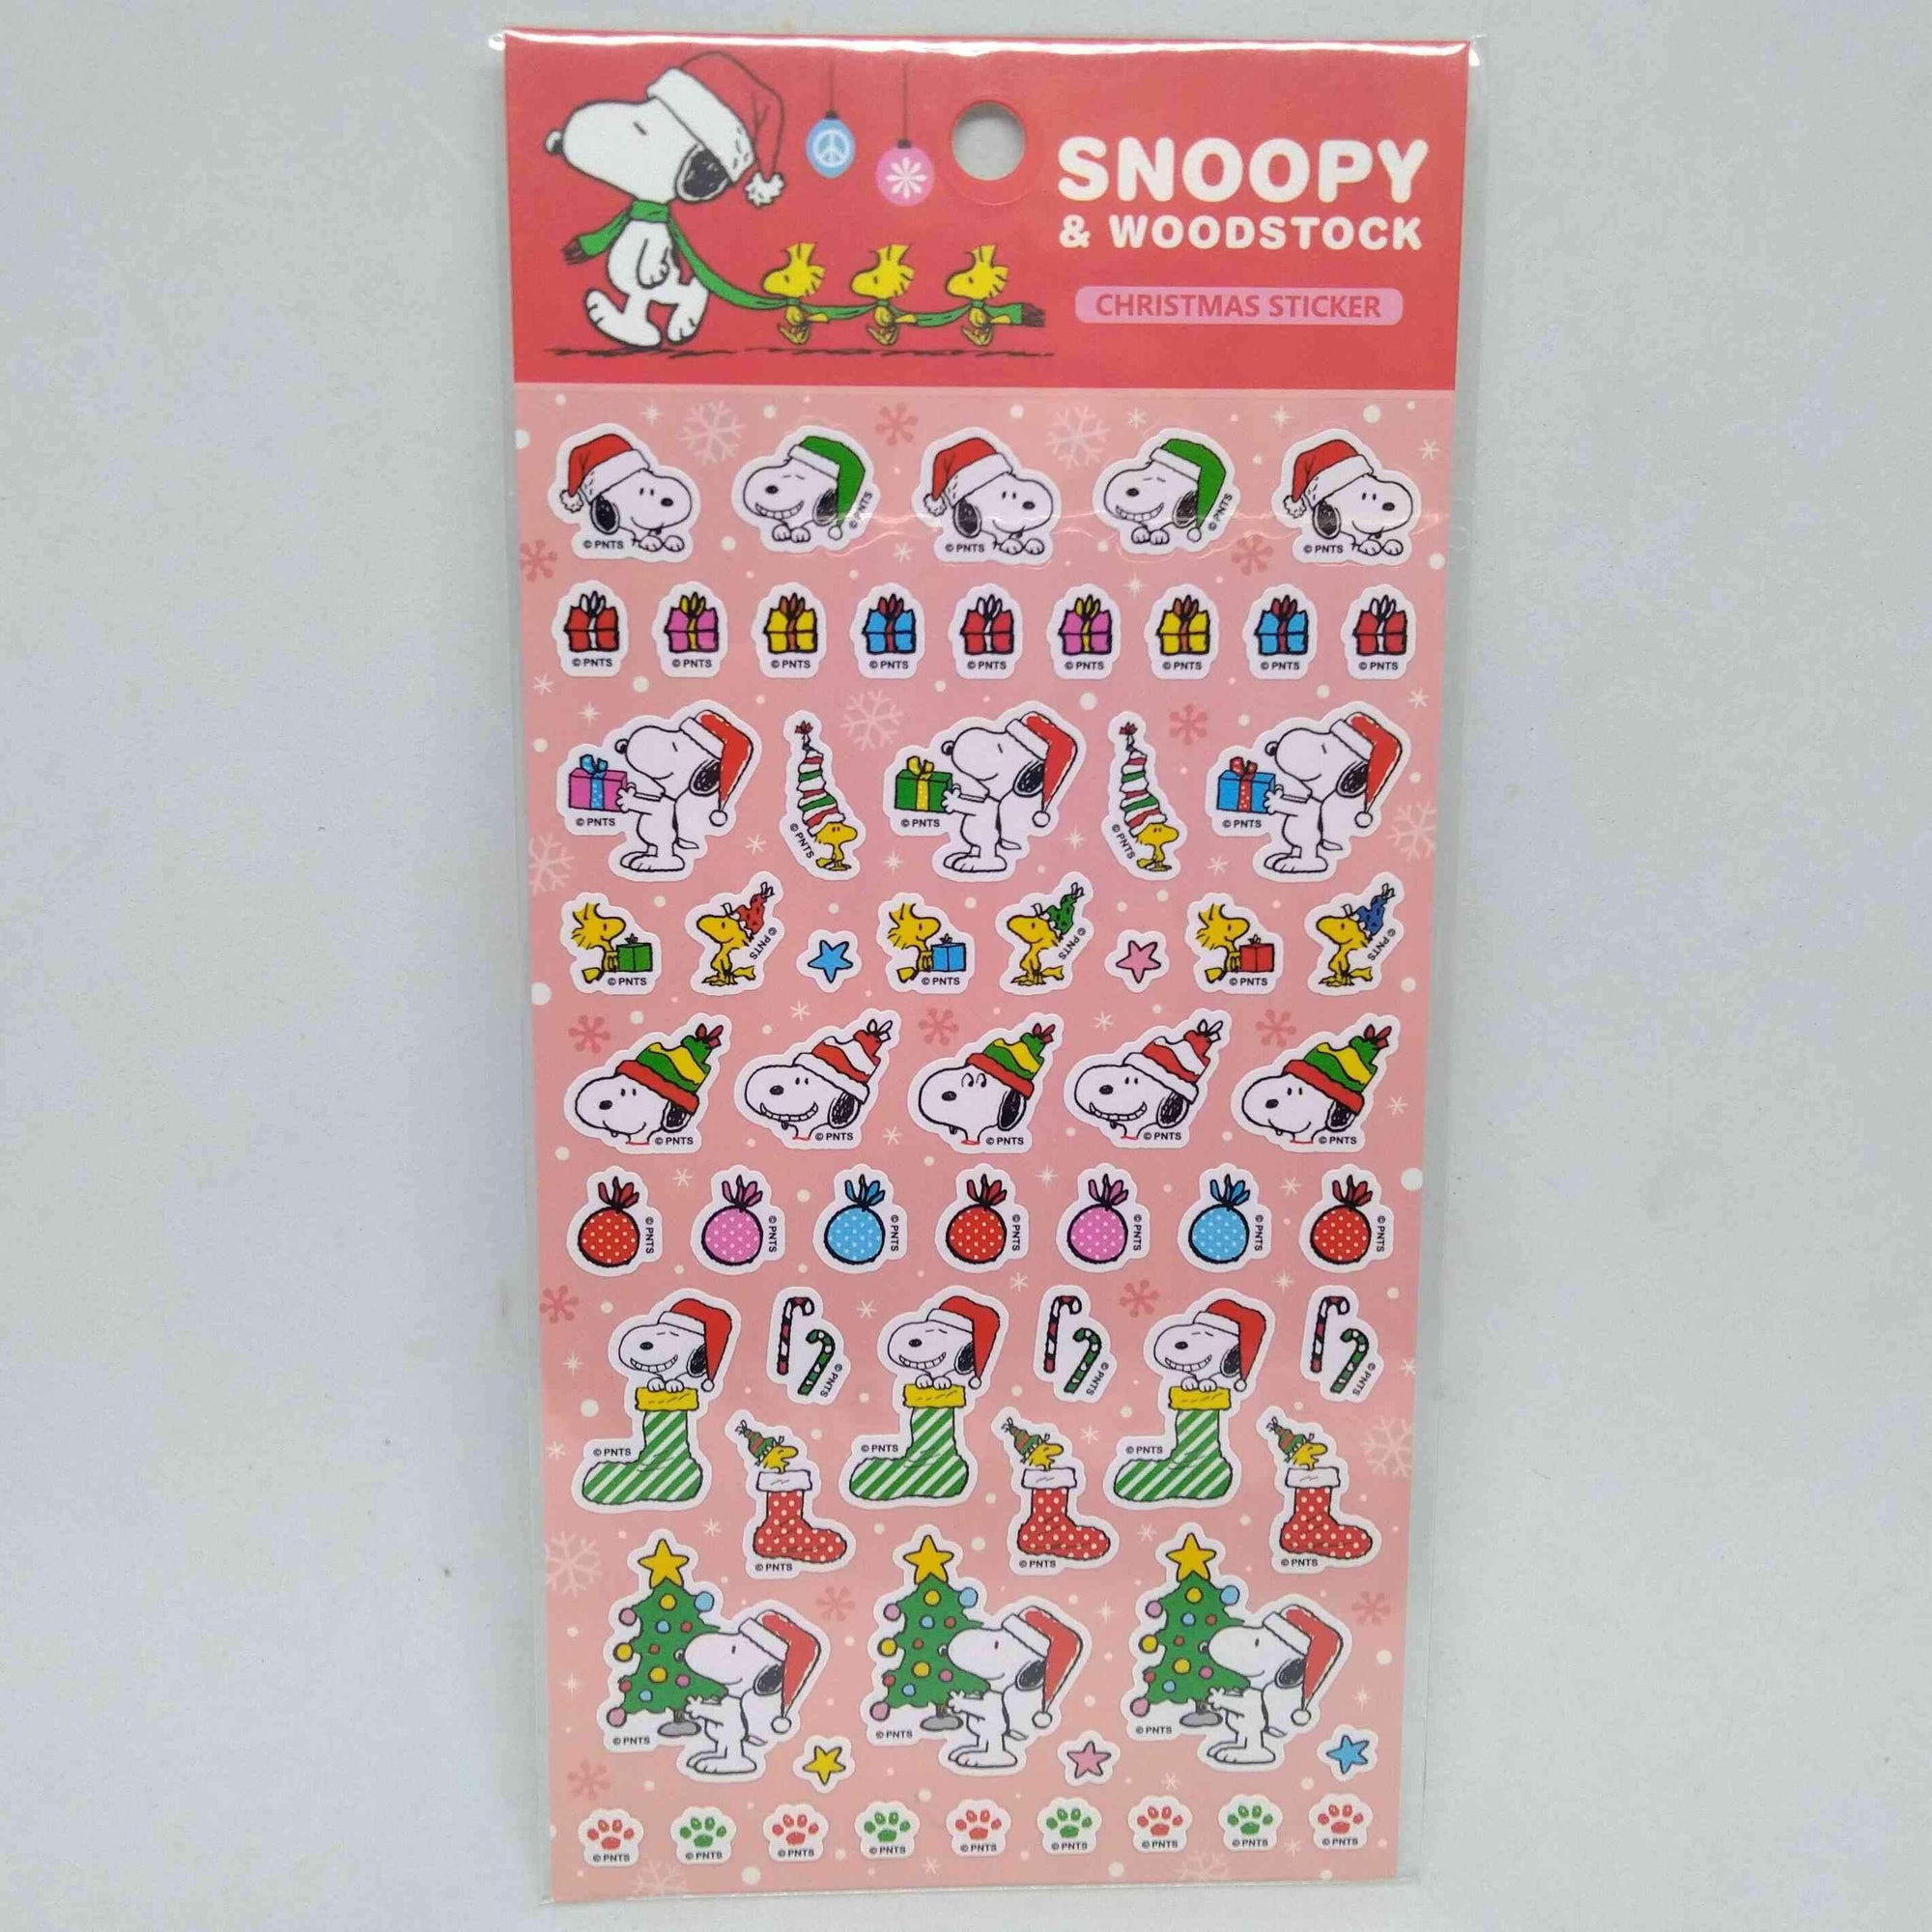 Snoopy & Woodstock Christmas Sticker